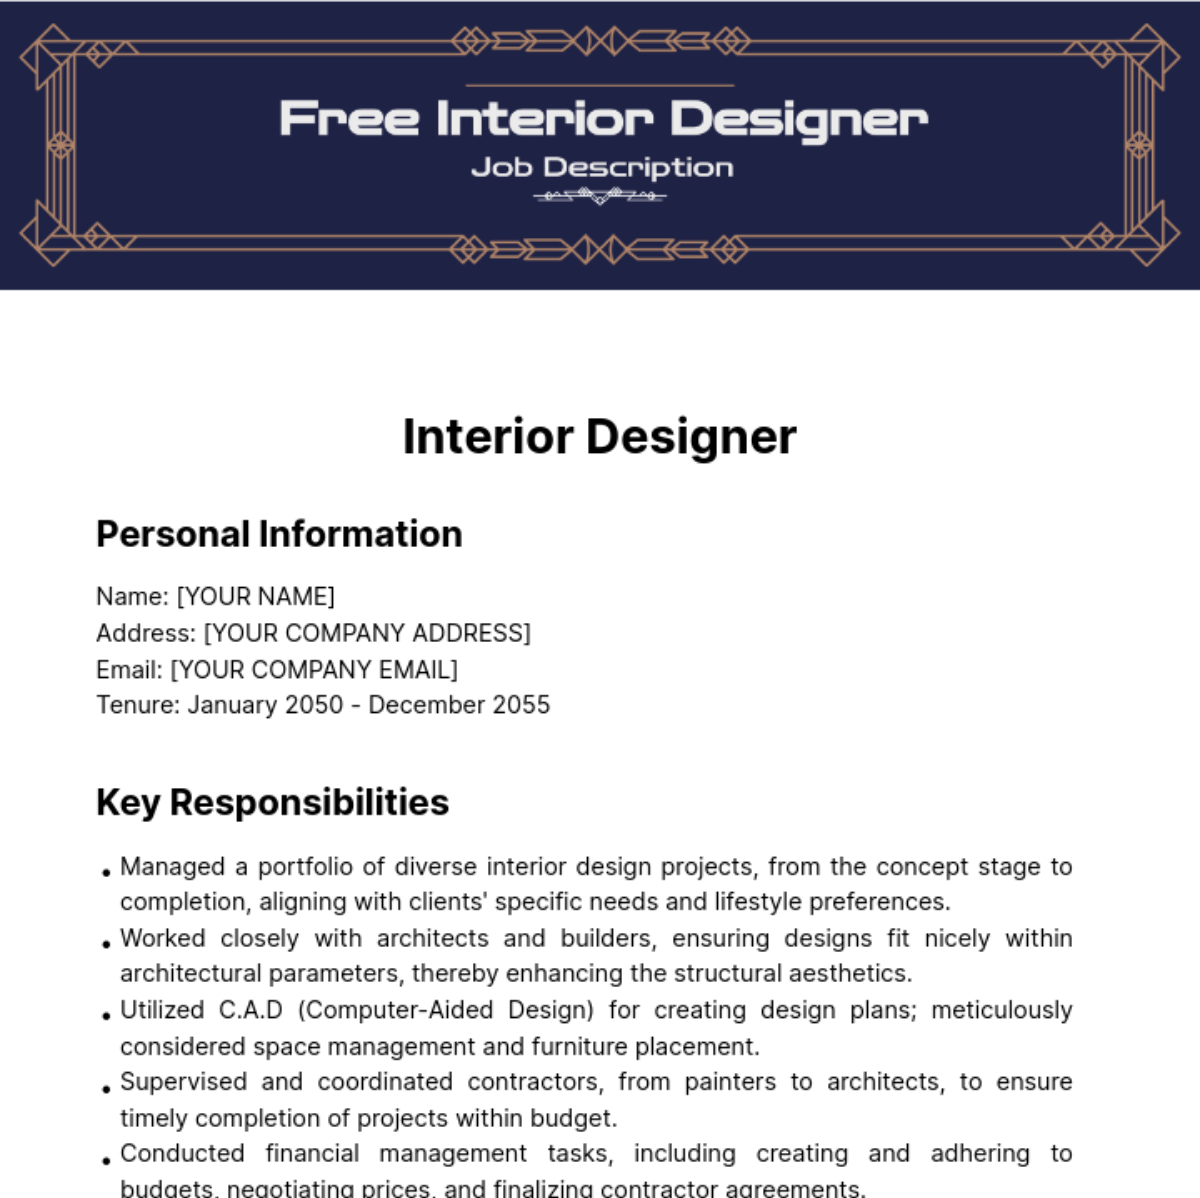 Free Interior Designer Job Description for Resume Template